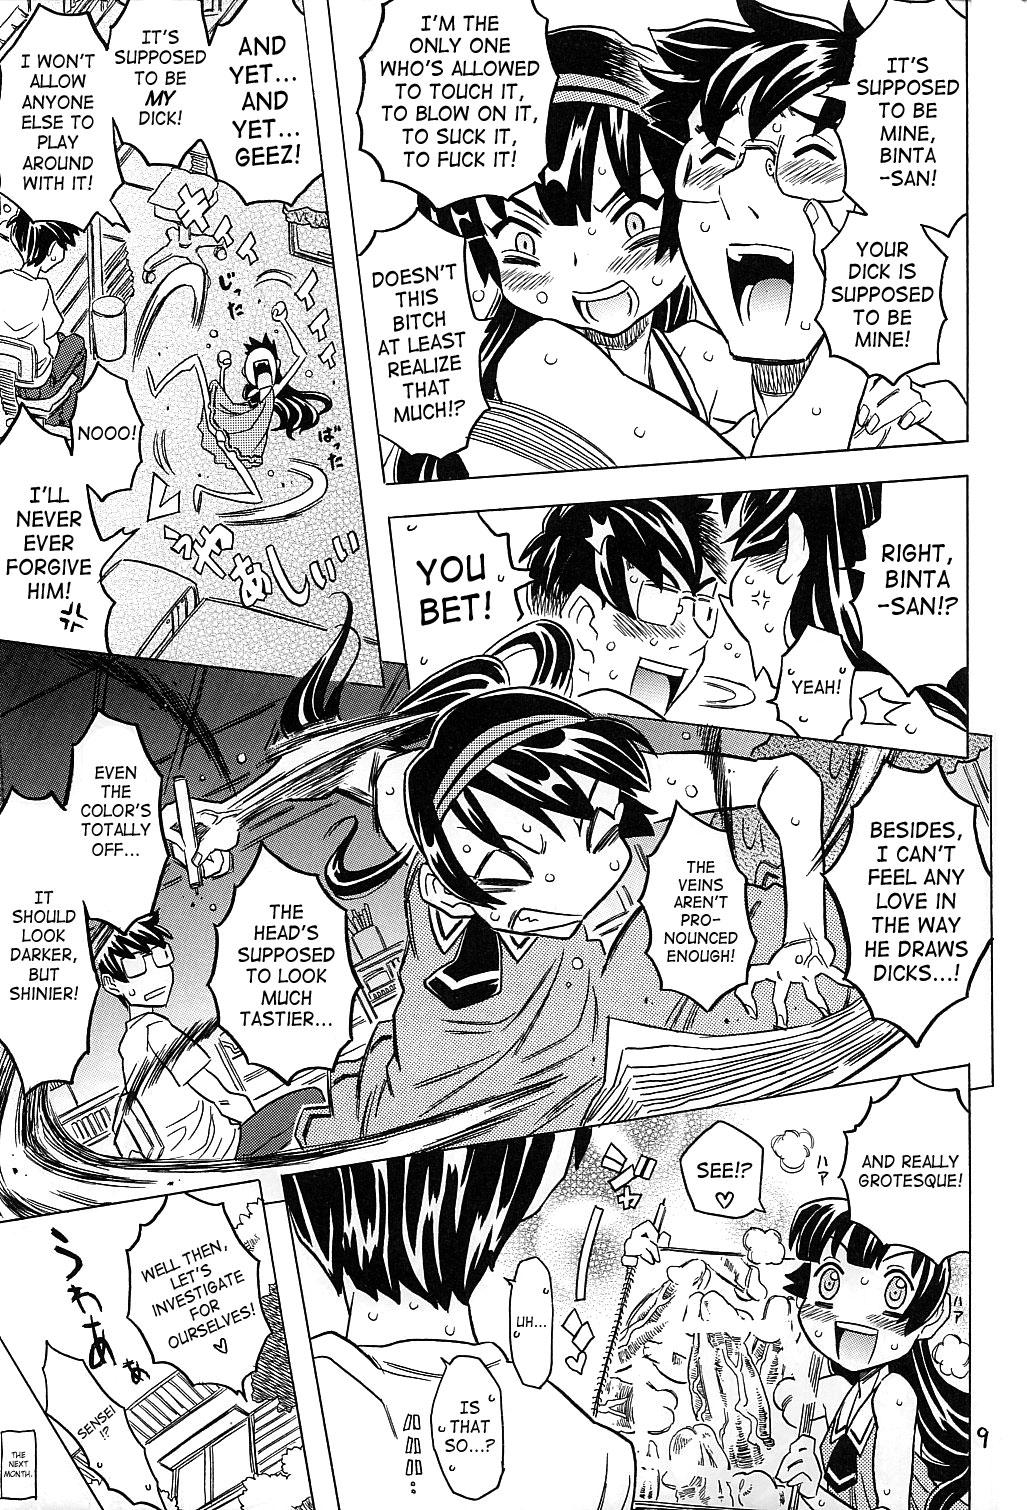 Female Ero Manga Artist Scorned 8